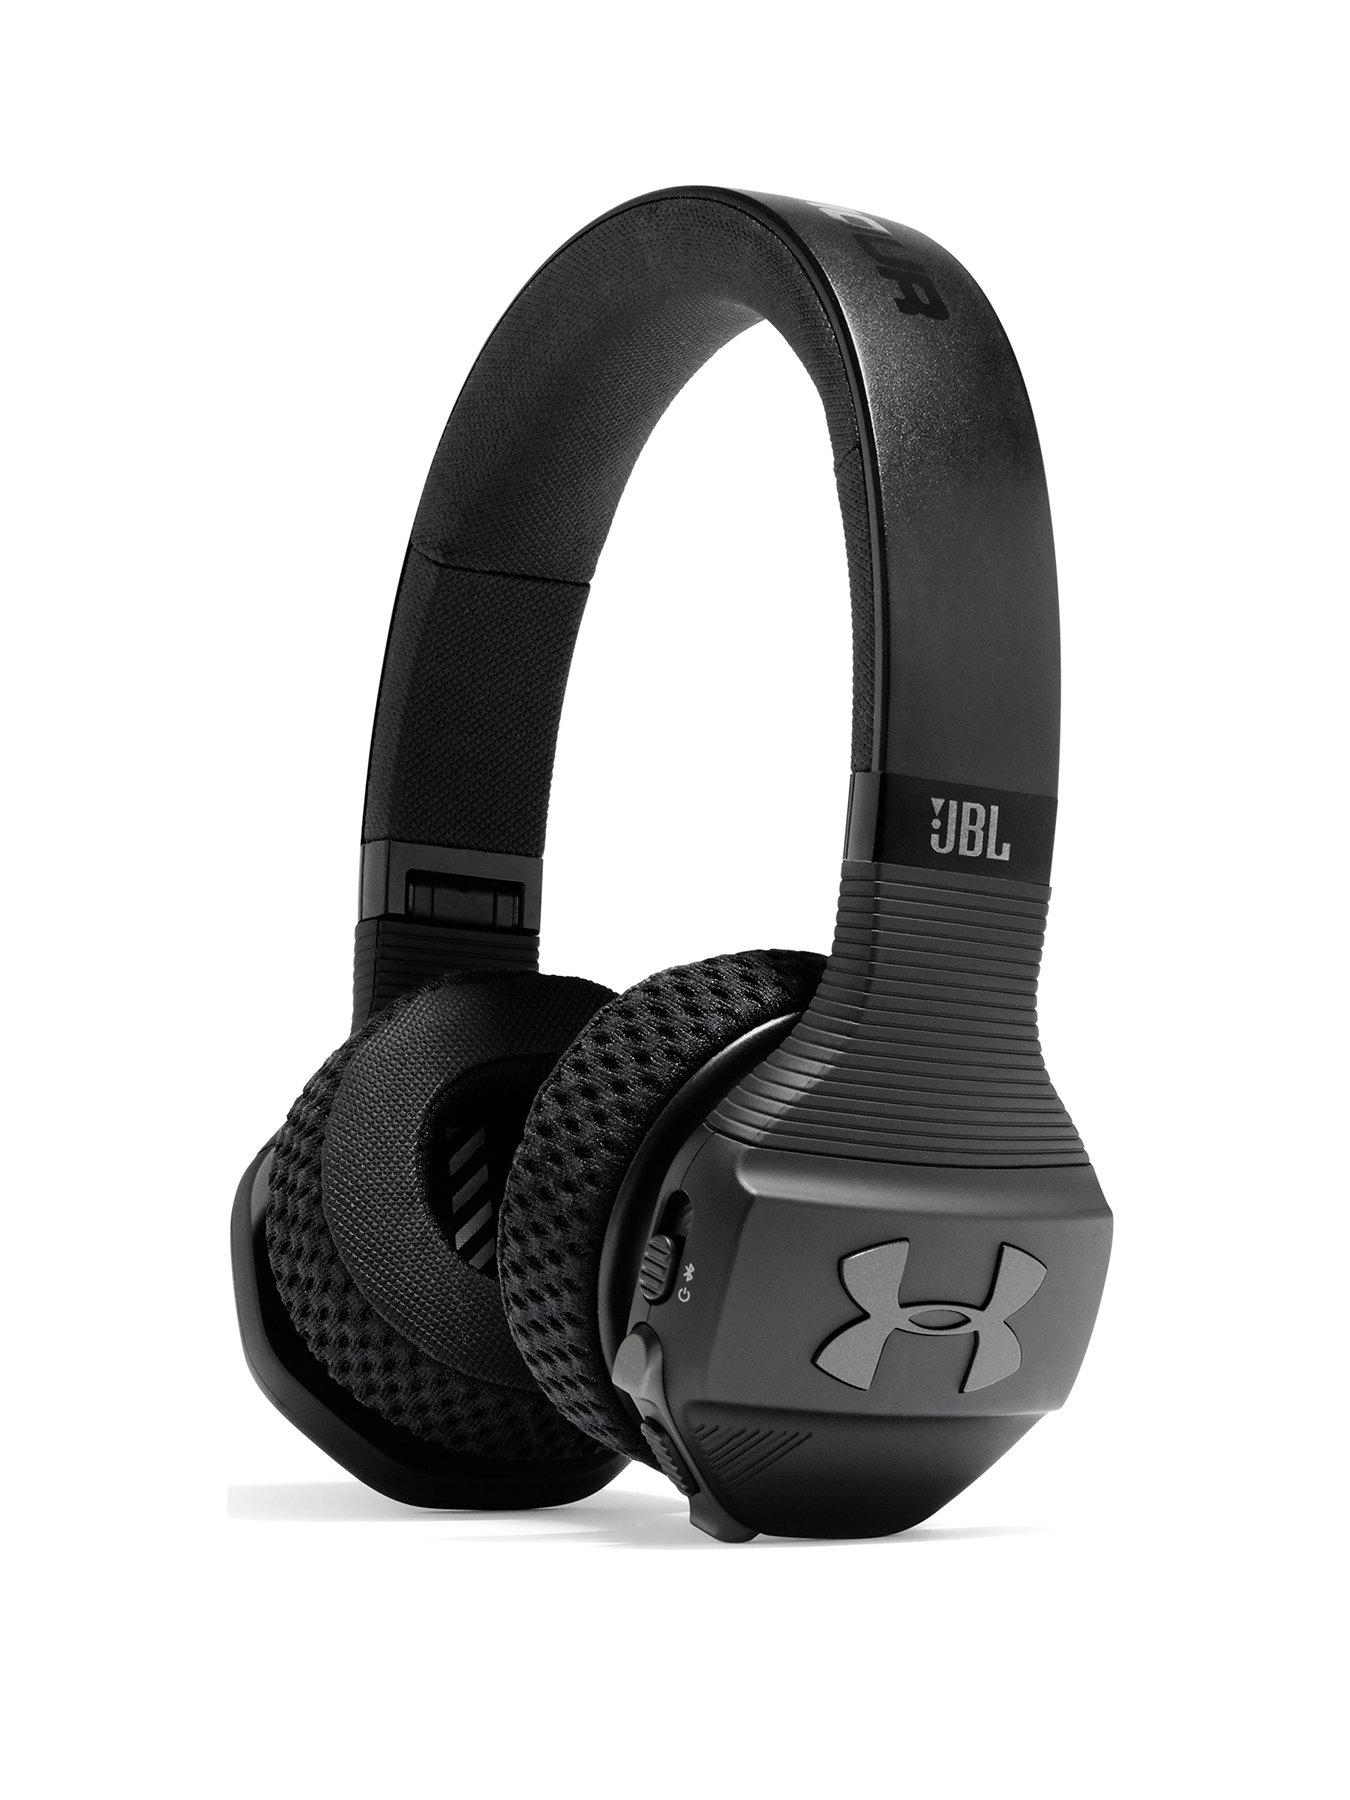 jbl sport wireless headphones under armour